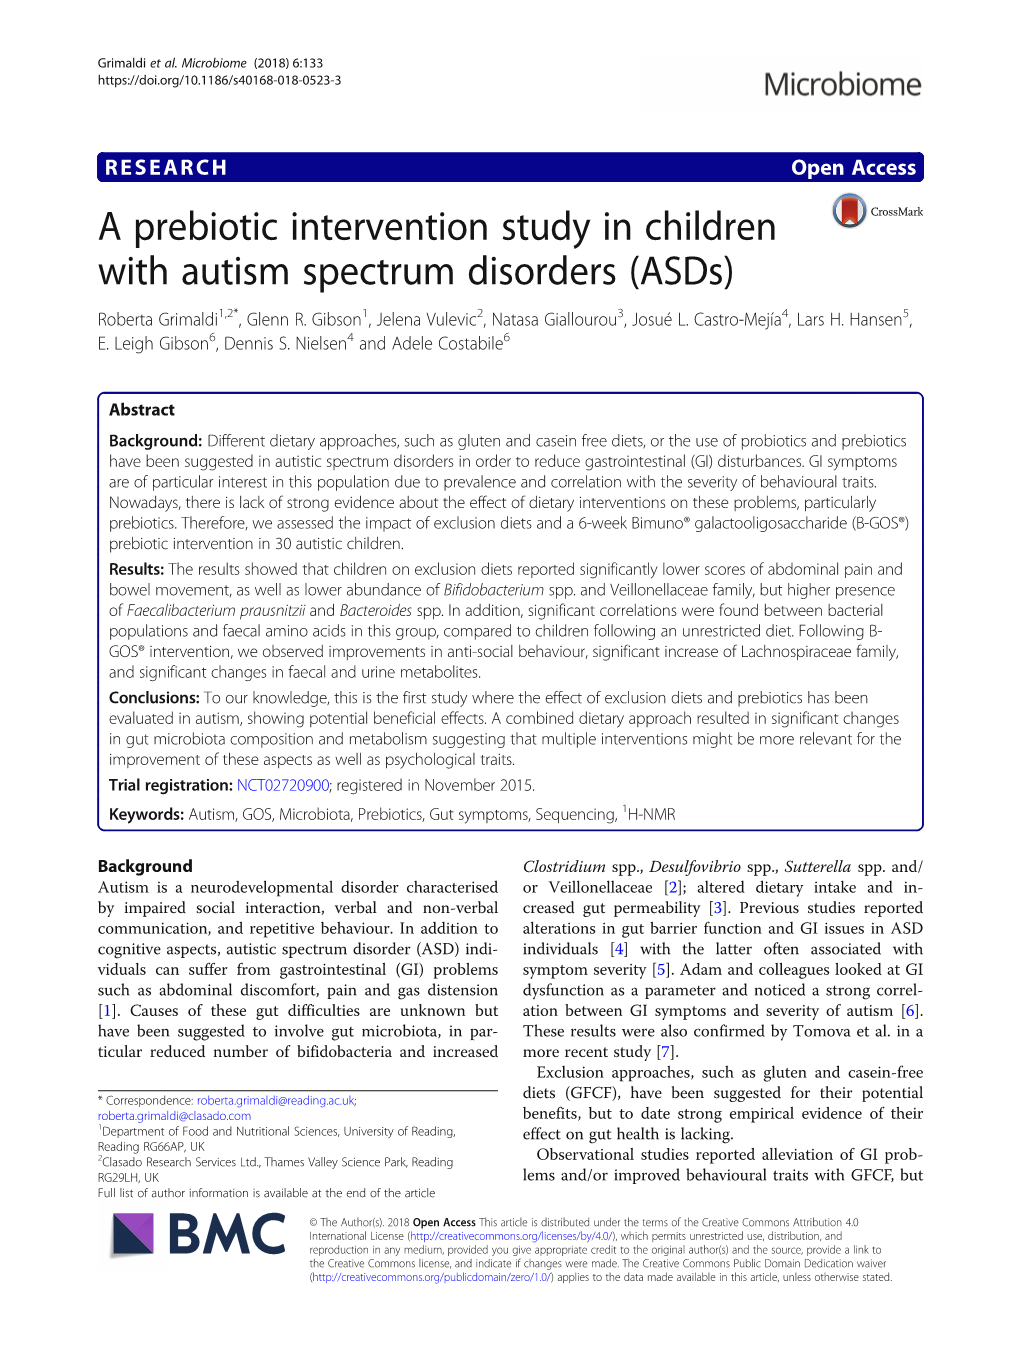 A Prebiotic Intervention Study in Children with Autism Spectrum Disorders (Asds) Roberta Grimaldi1,2*, Glenn R